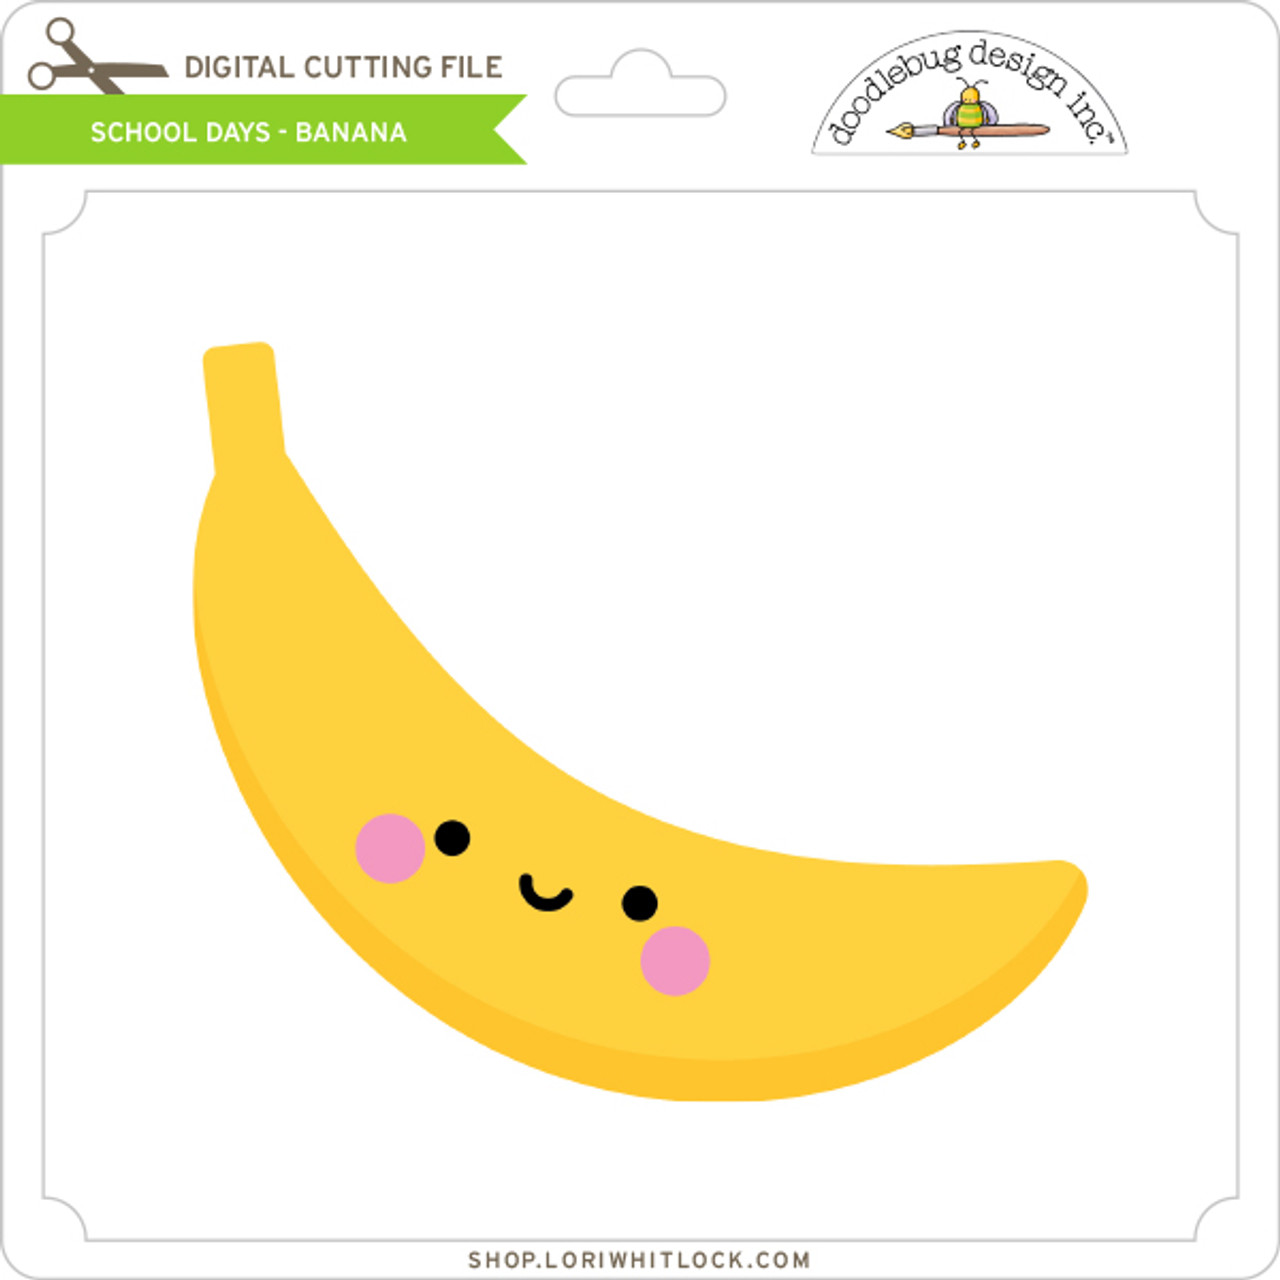 https://cdn11.bigcommerce.com/s-zlf3iiy2/images/stencil/1280x1280/products/13425/14790/DB-School-Days-Banana__74627.1568103153.jpg?c=2